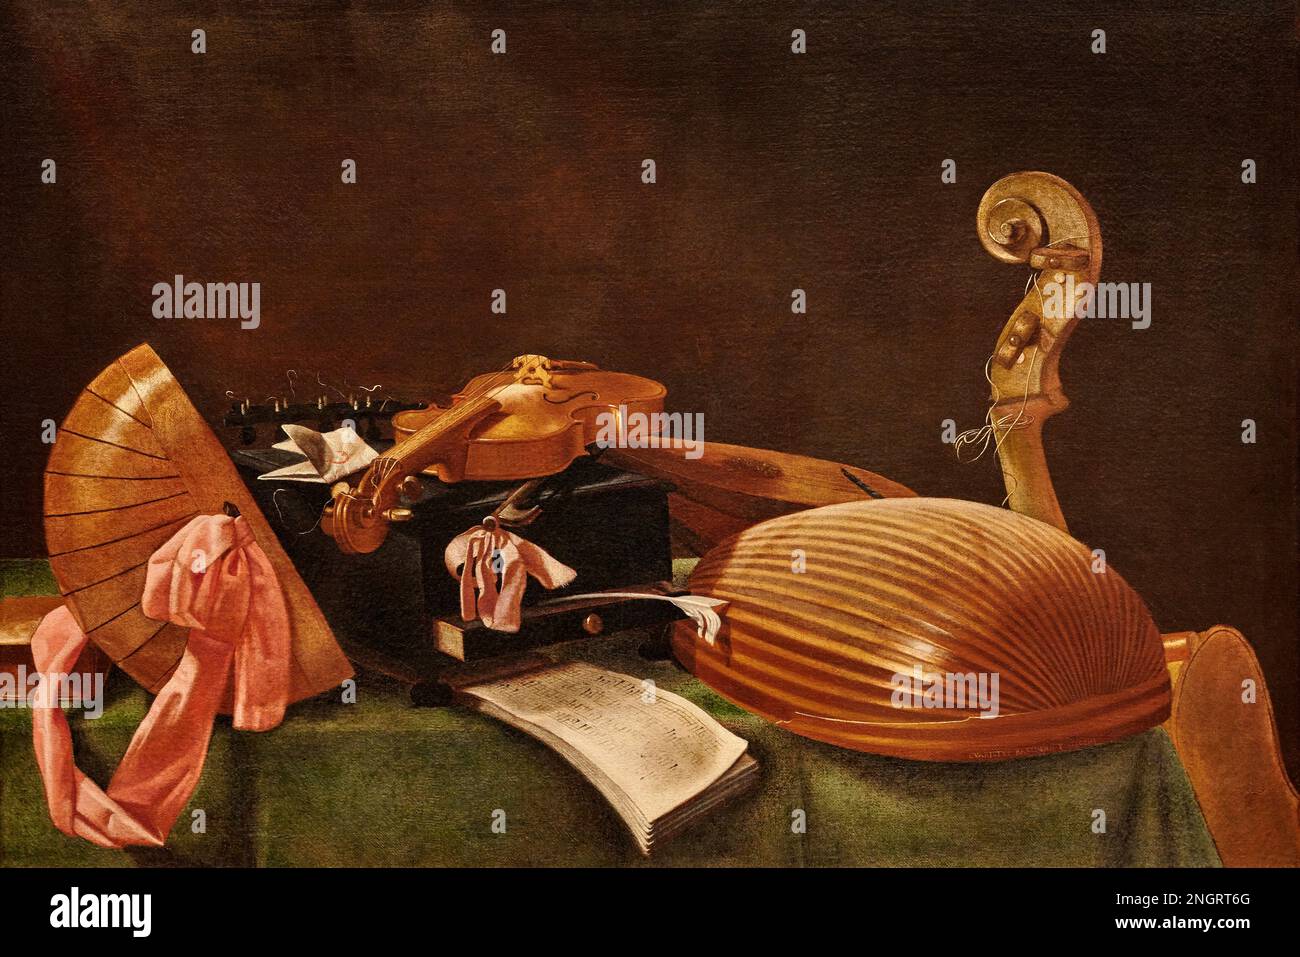 Strumenti musicali - olio su tela - Evaristo Baschenis - 1670 - Bergamo, Accademia Carrara Stockfoto